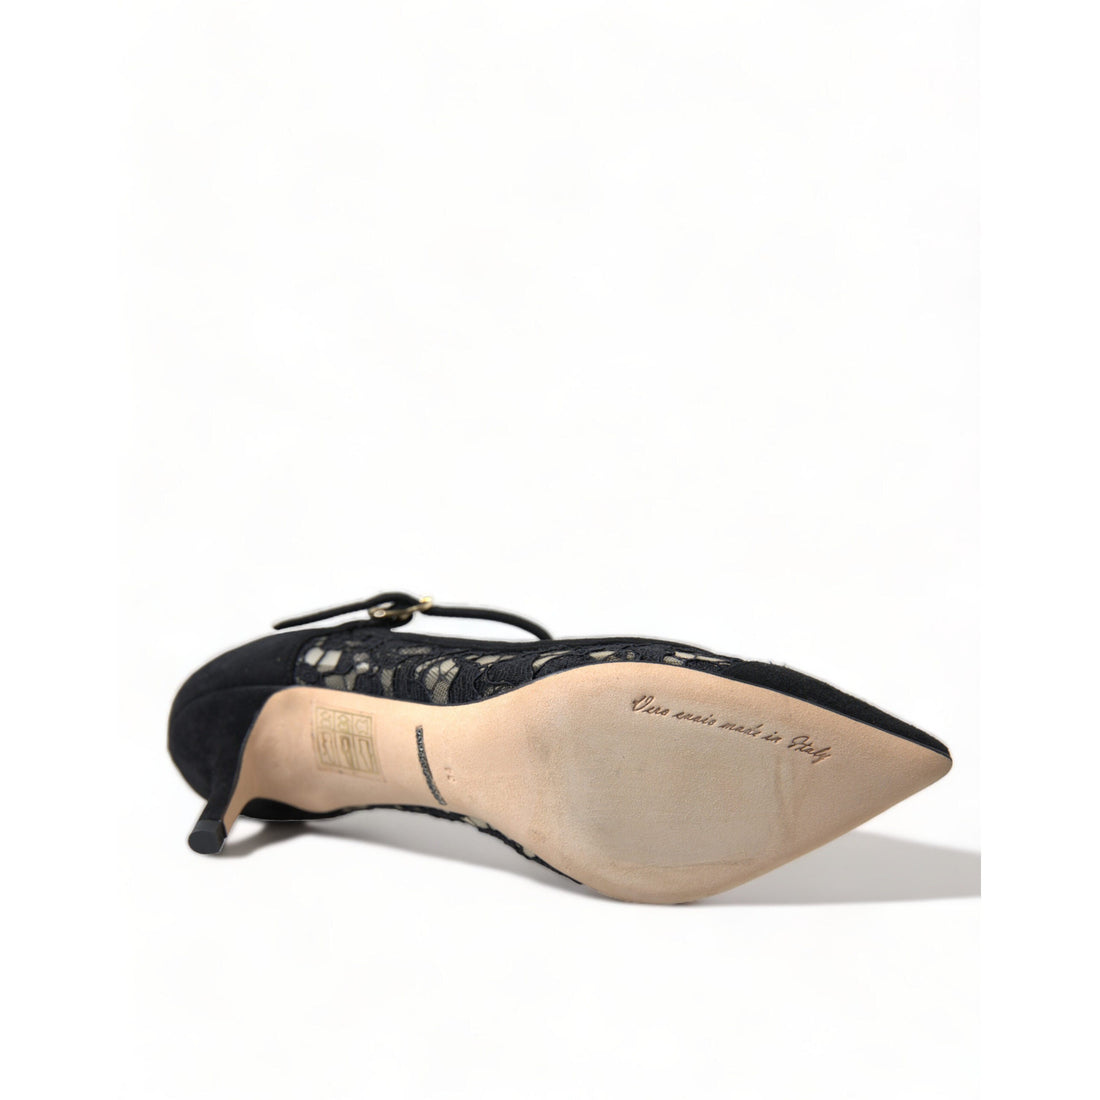 Dolce & Gabbana Black Viscose Taormina Lace Pumps Shoes